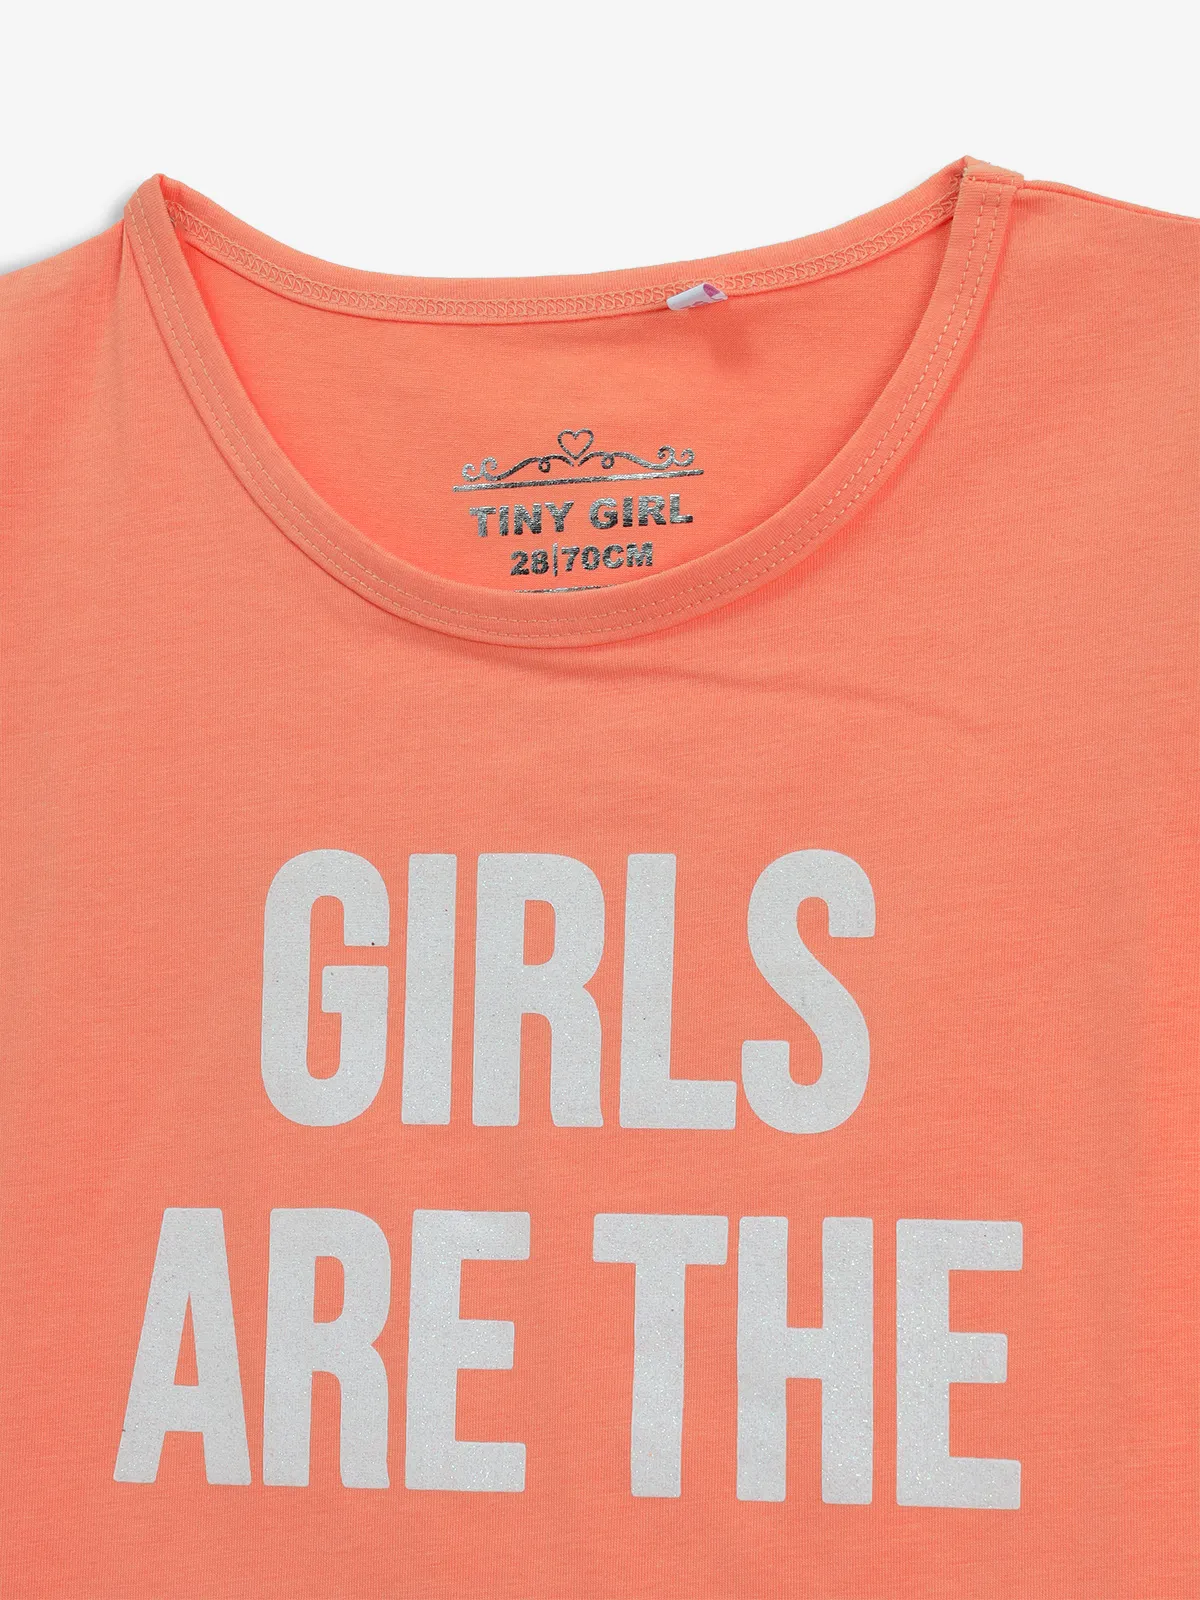 TINY GIRL printed cotton orange t-shirt